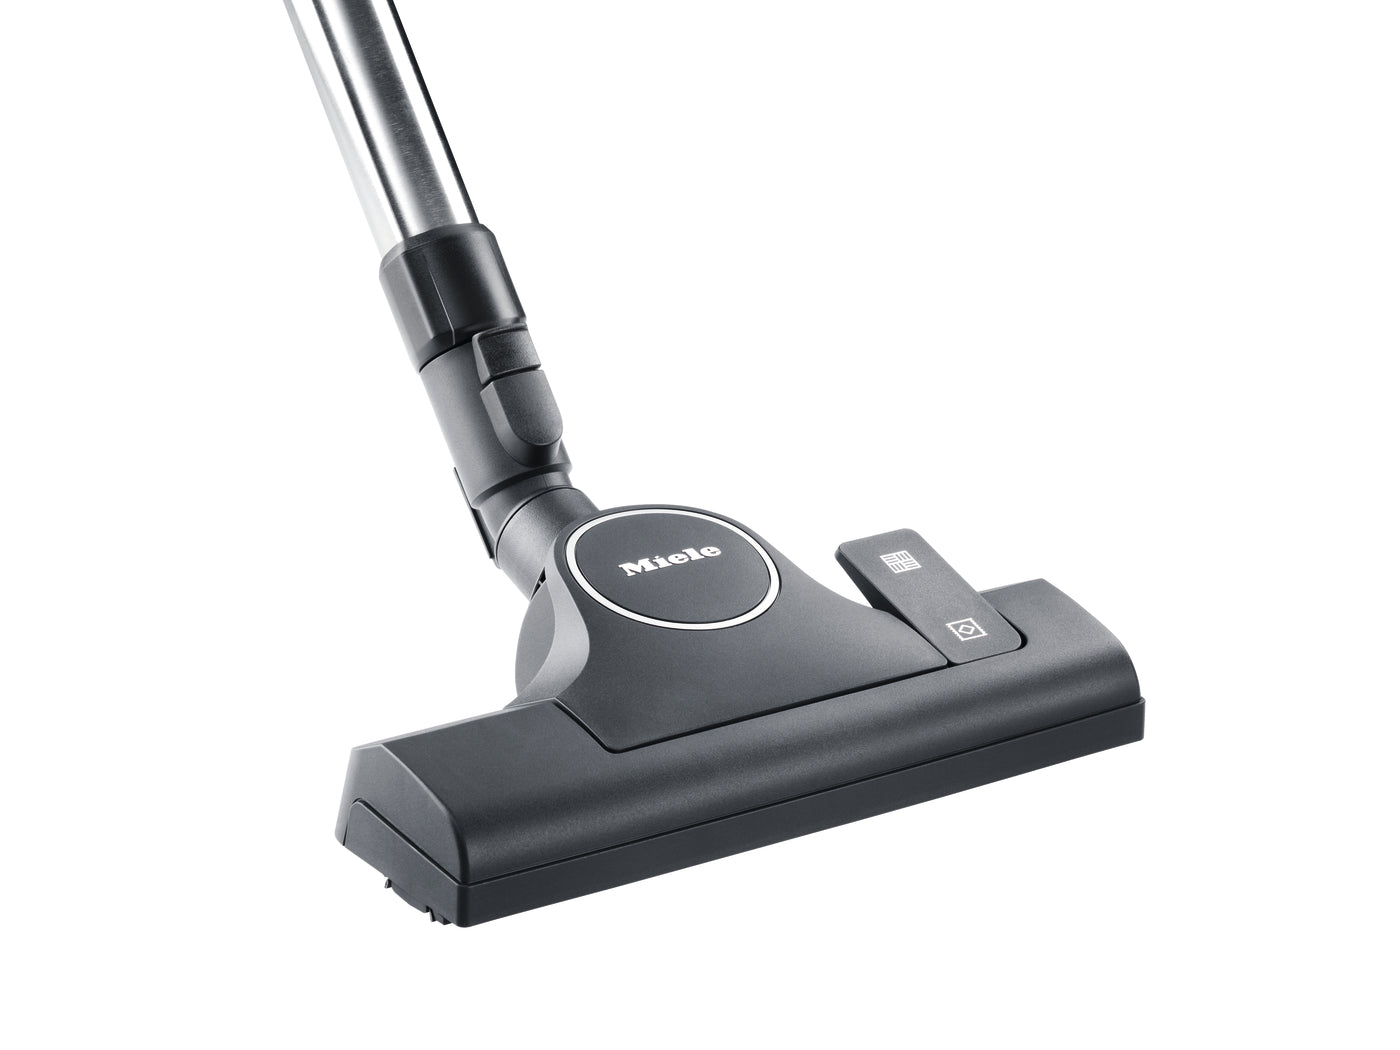 Buy Vacuum Parquet online shop Specialists CX1 Compact Miele Boost Vacuum Bagless |